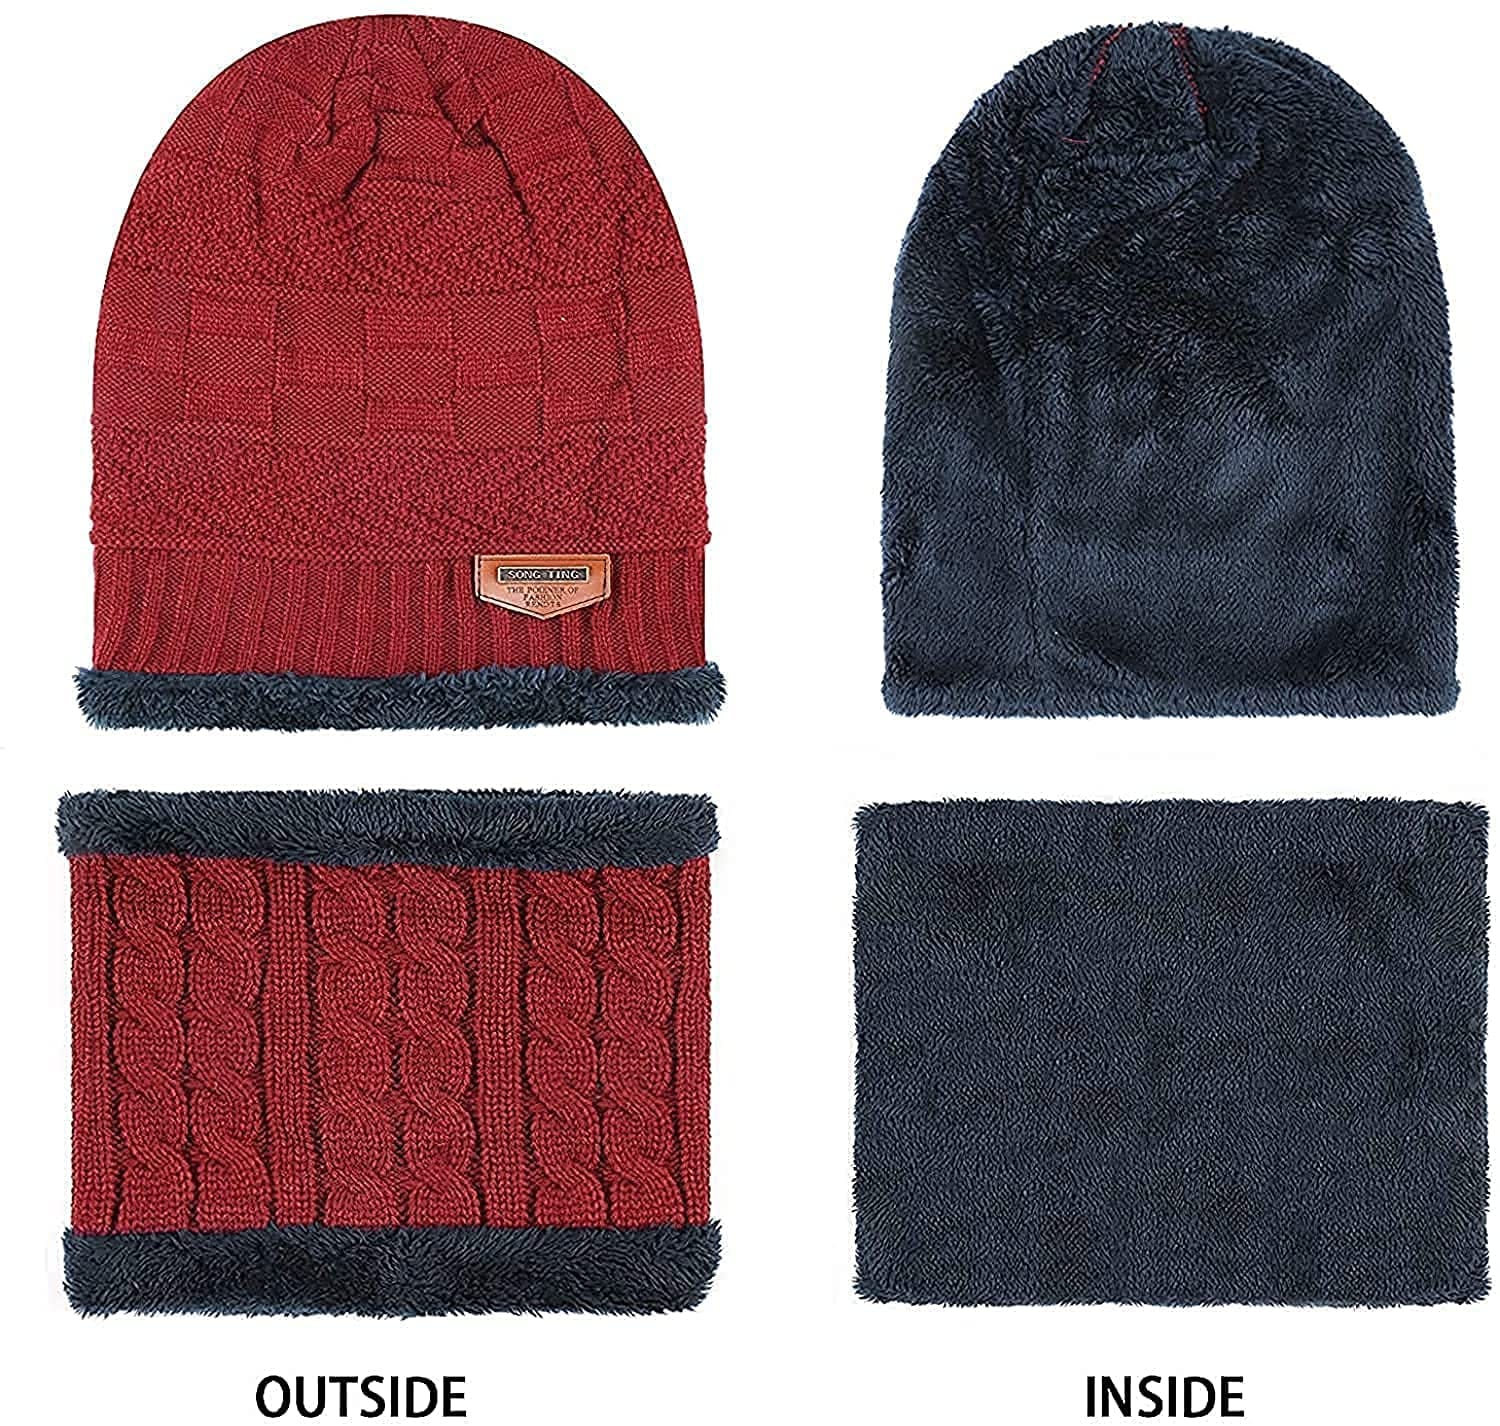 Unisex Beanie Wool Cap With Neck Warmer - Red